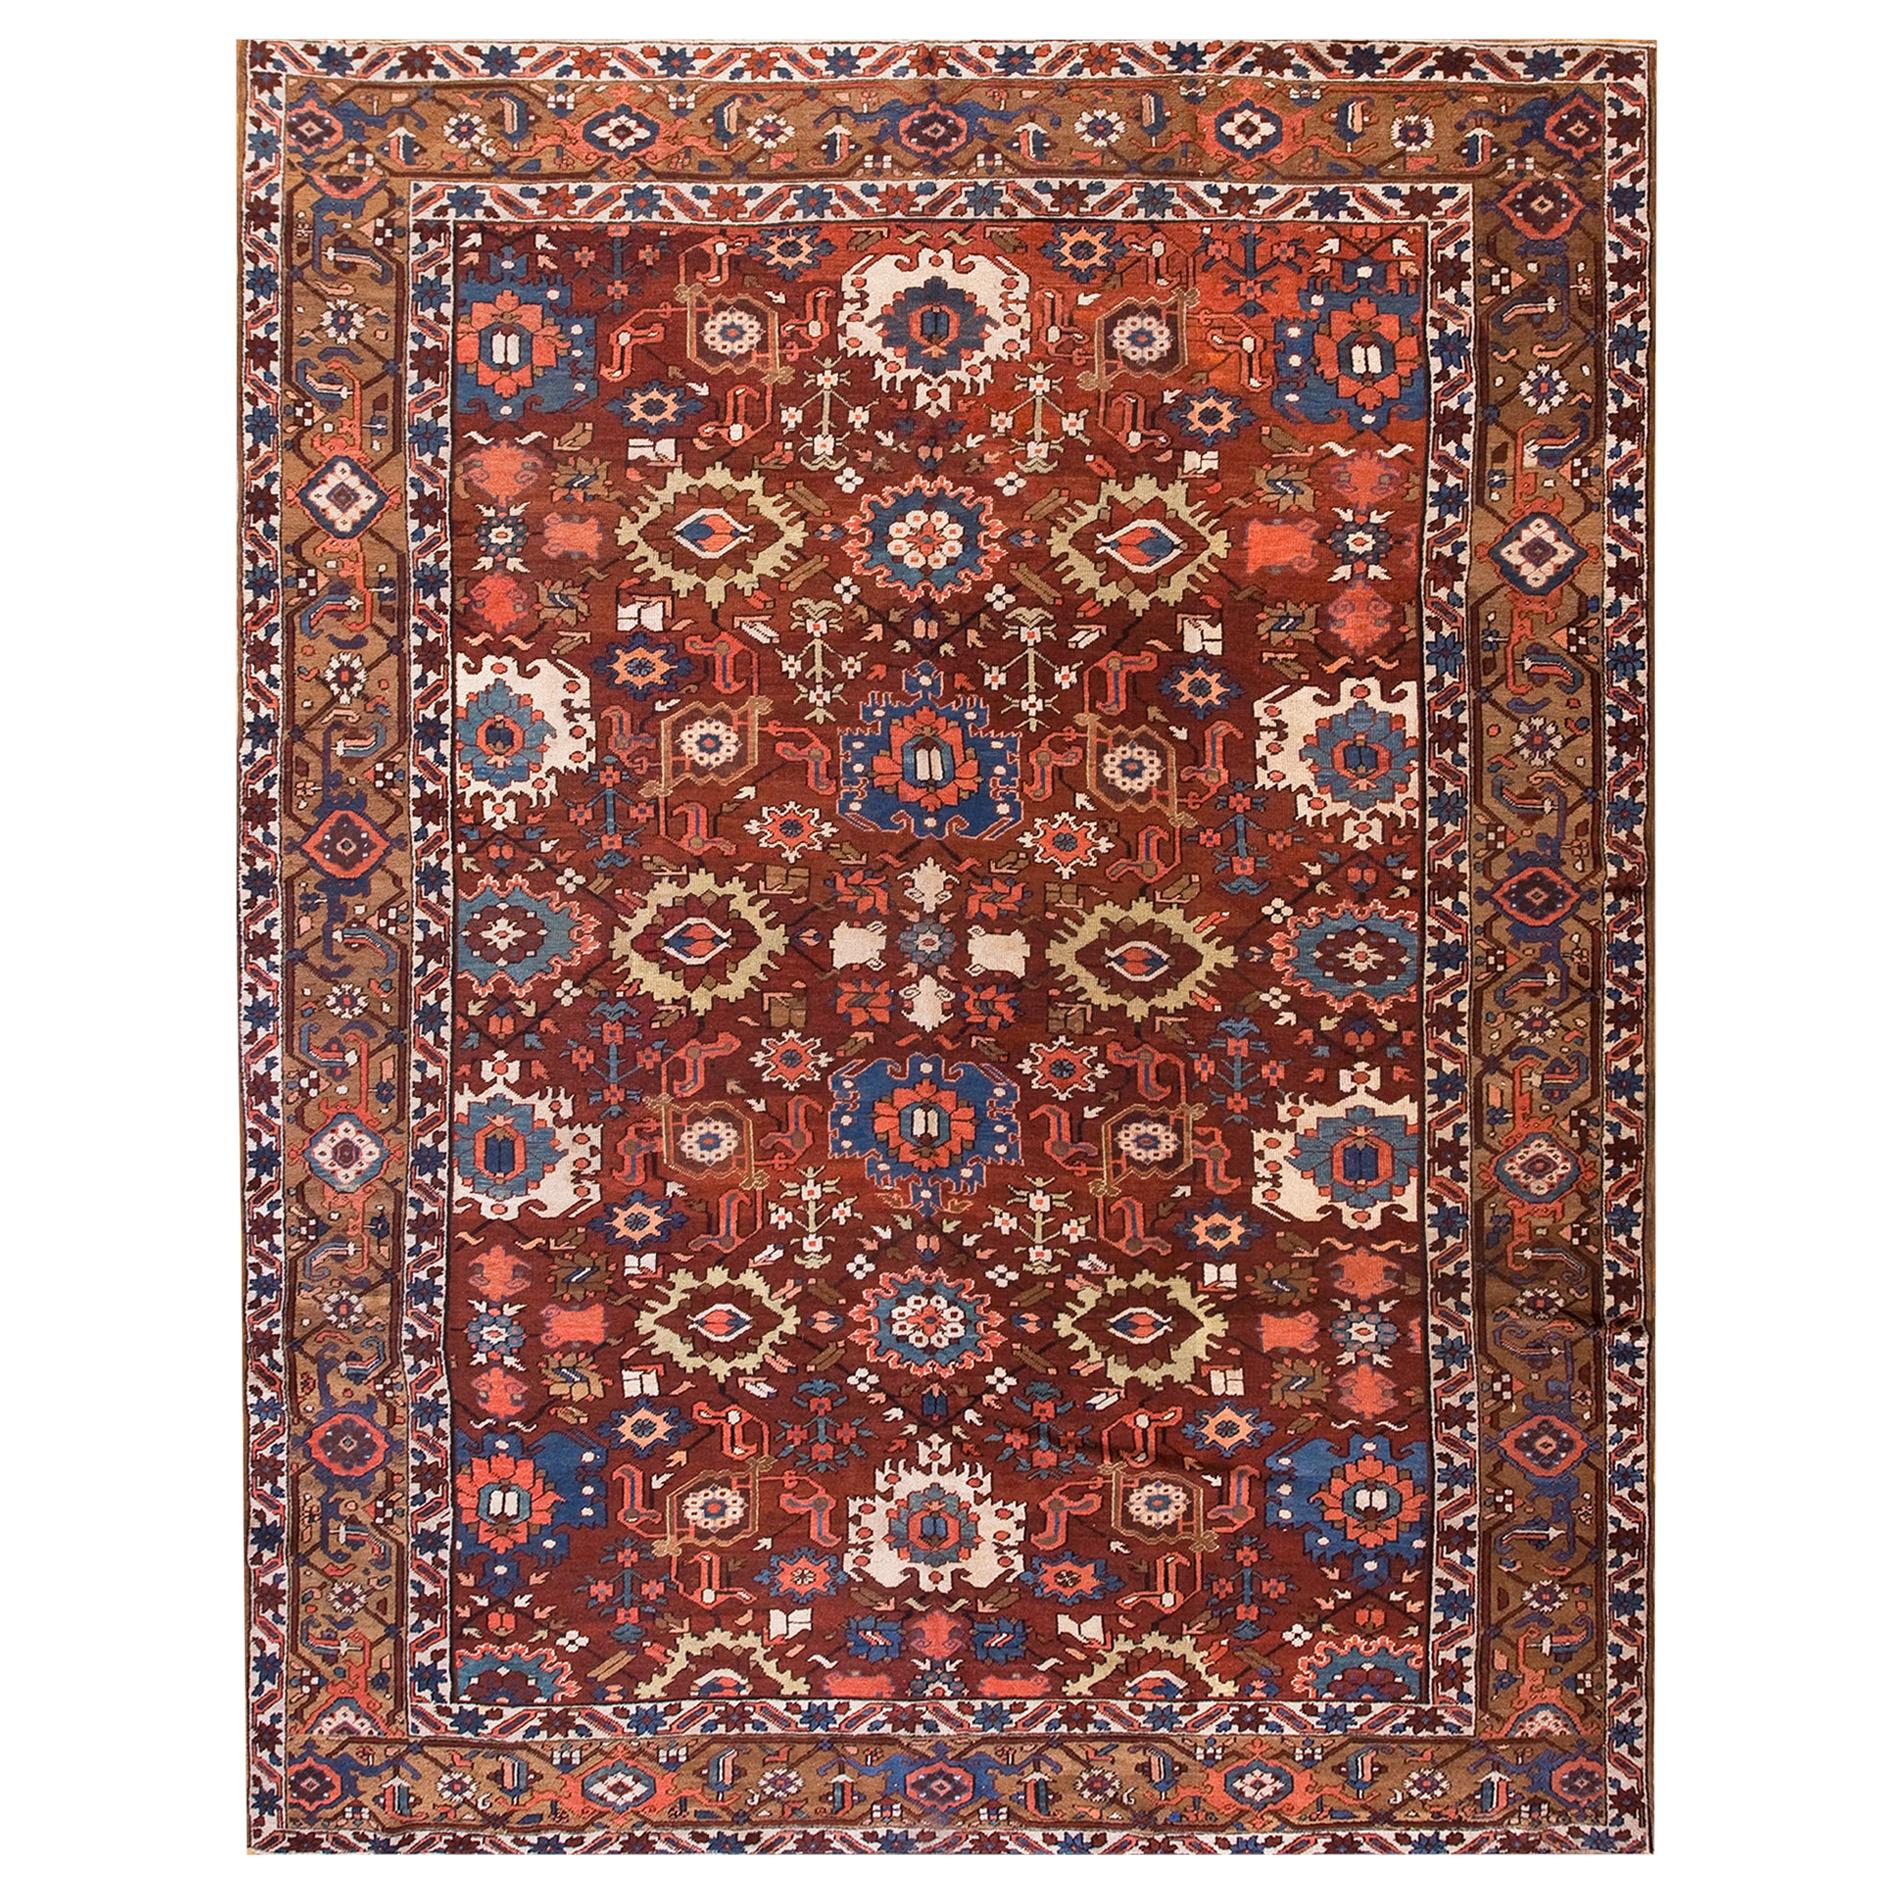 Late 19th Century N.W. Persian Heriz Carpet ( 9'3" x 12' - 282 x 366 ) For Sale